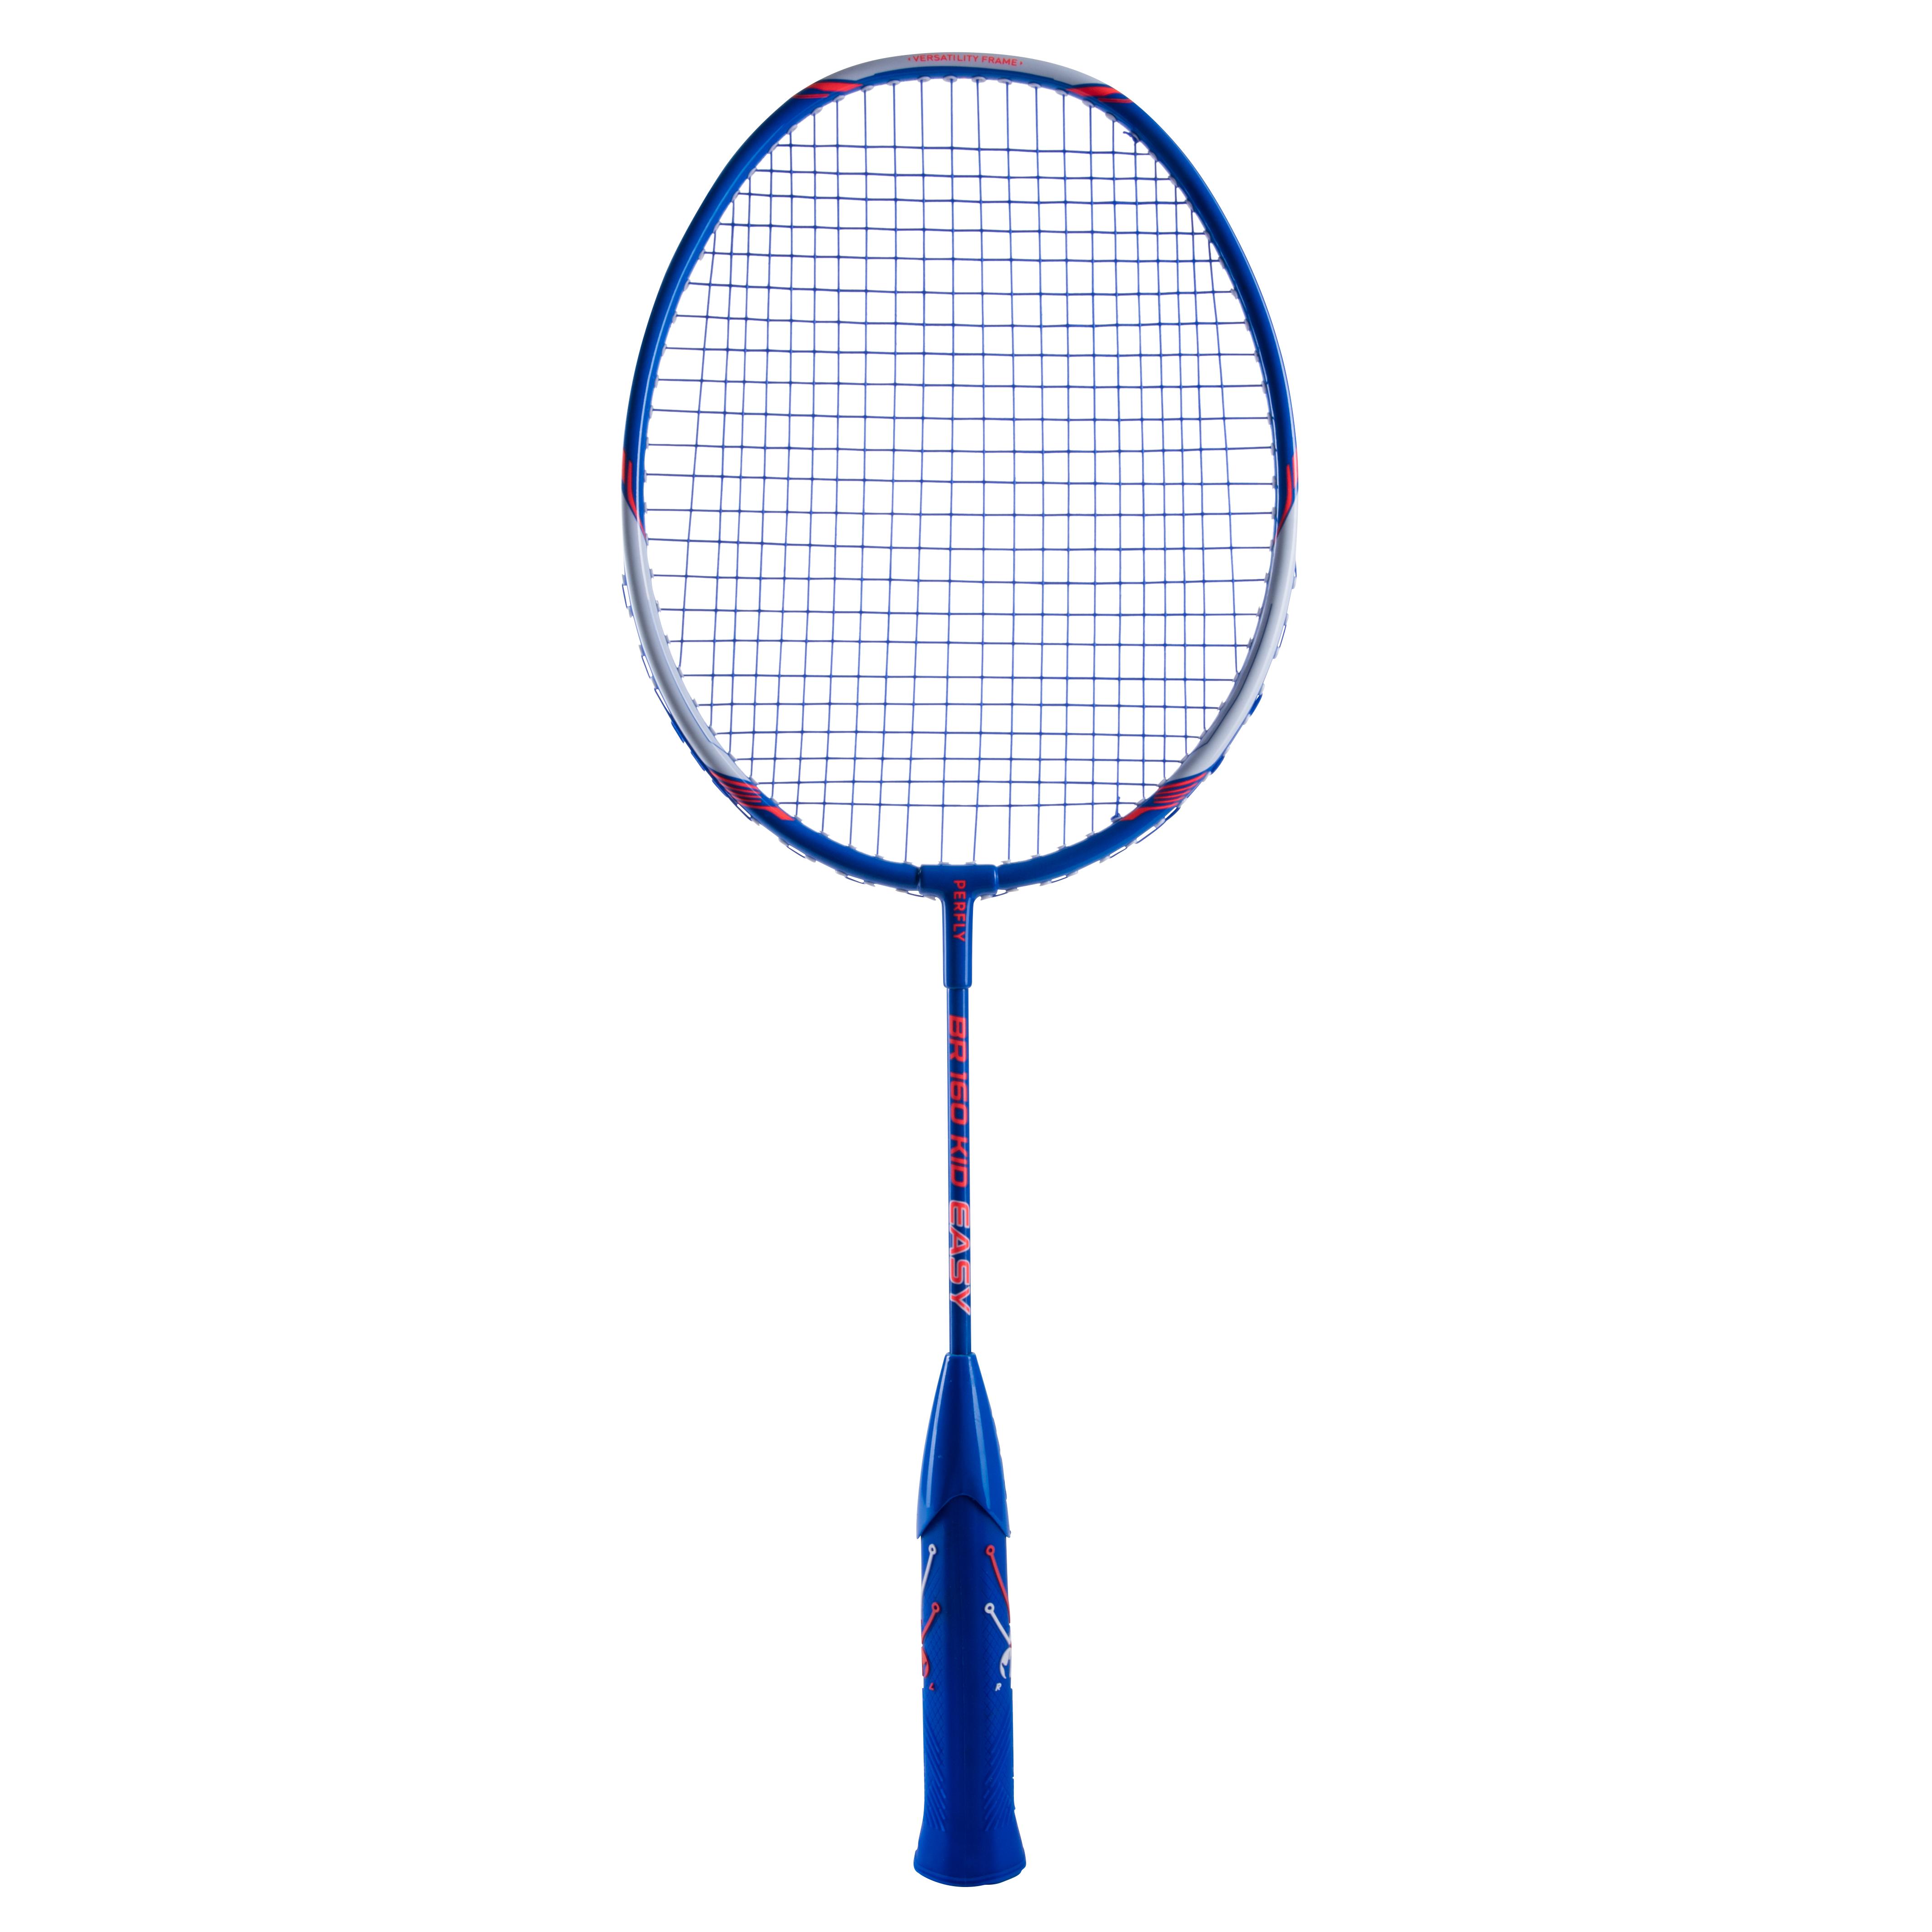 Rachetă Badminton BR 160 Easy Grip Albastru Copii La Oferta Online decathlon imagine La Oferta Online